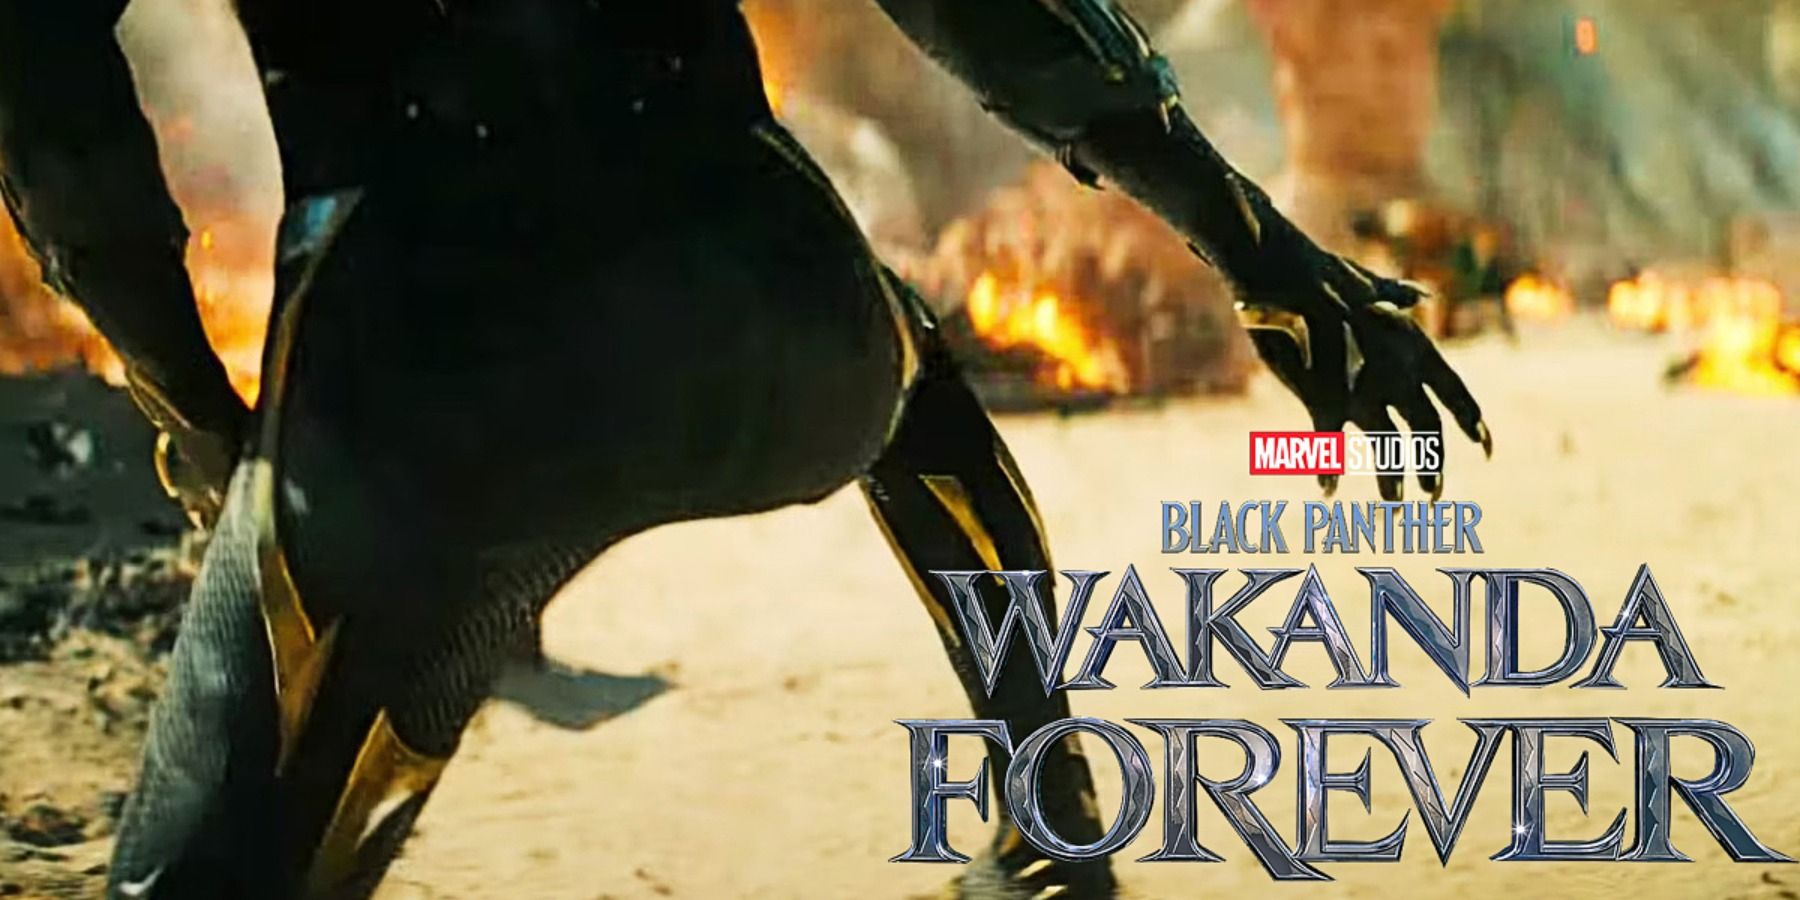 Black Panther Wakanda Forever trailer